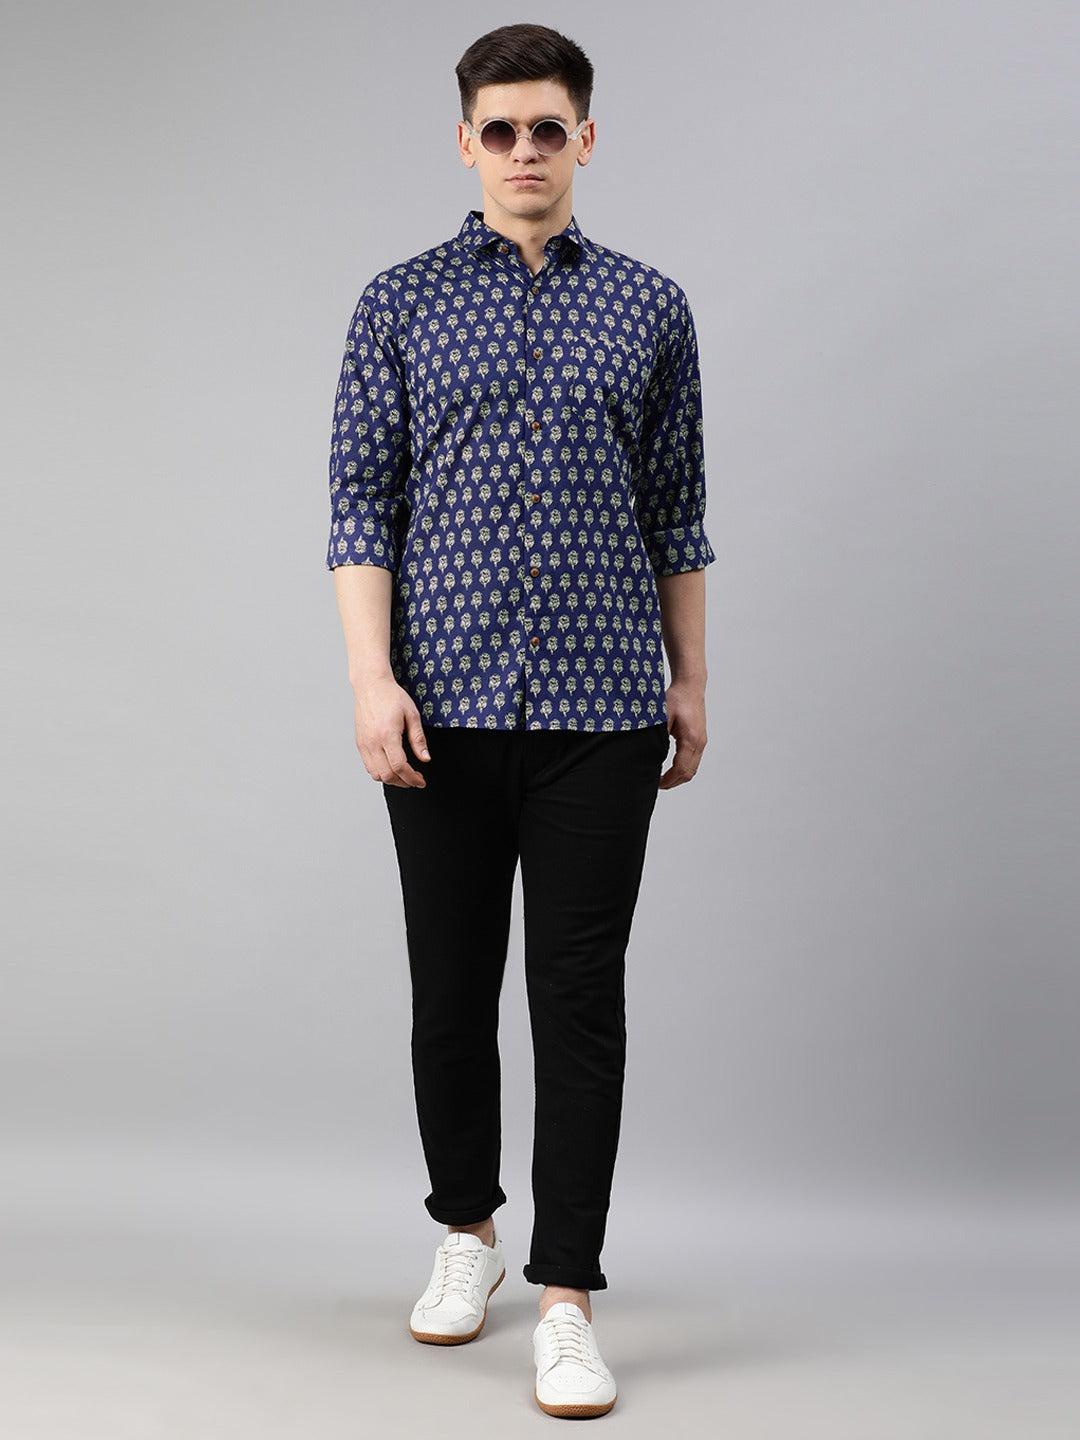 Millennial Men Blue & White Regular Fit Printed Casual Shirt